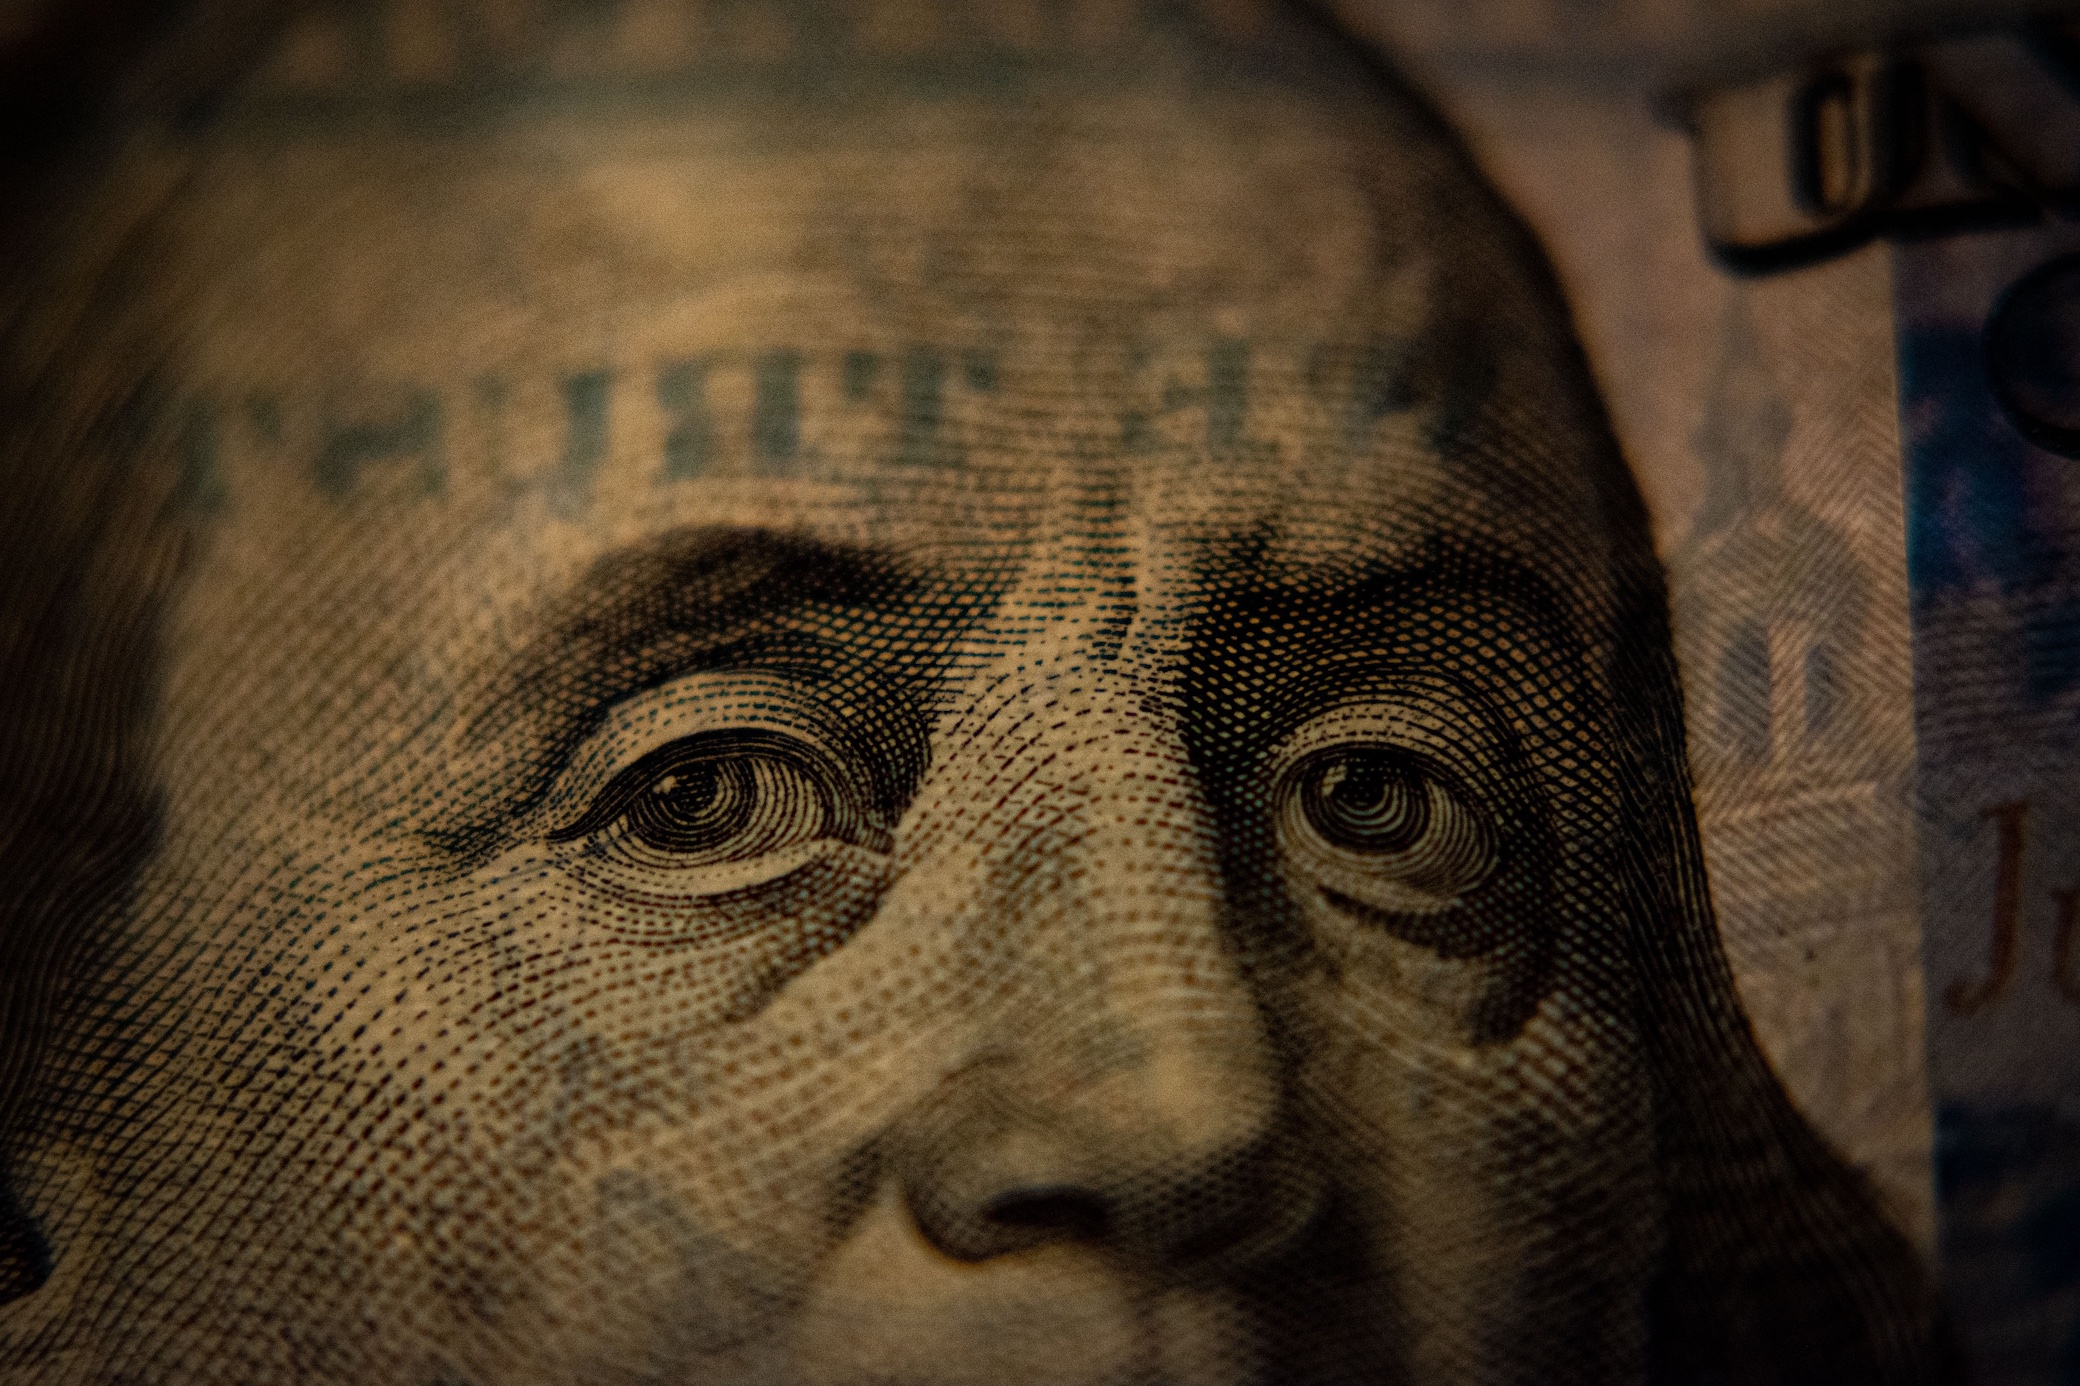 A closeup of a US hundred dollar bill (Benjamin Franklin side); image by Adam, via Unsplash.com.